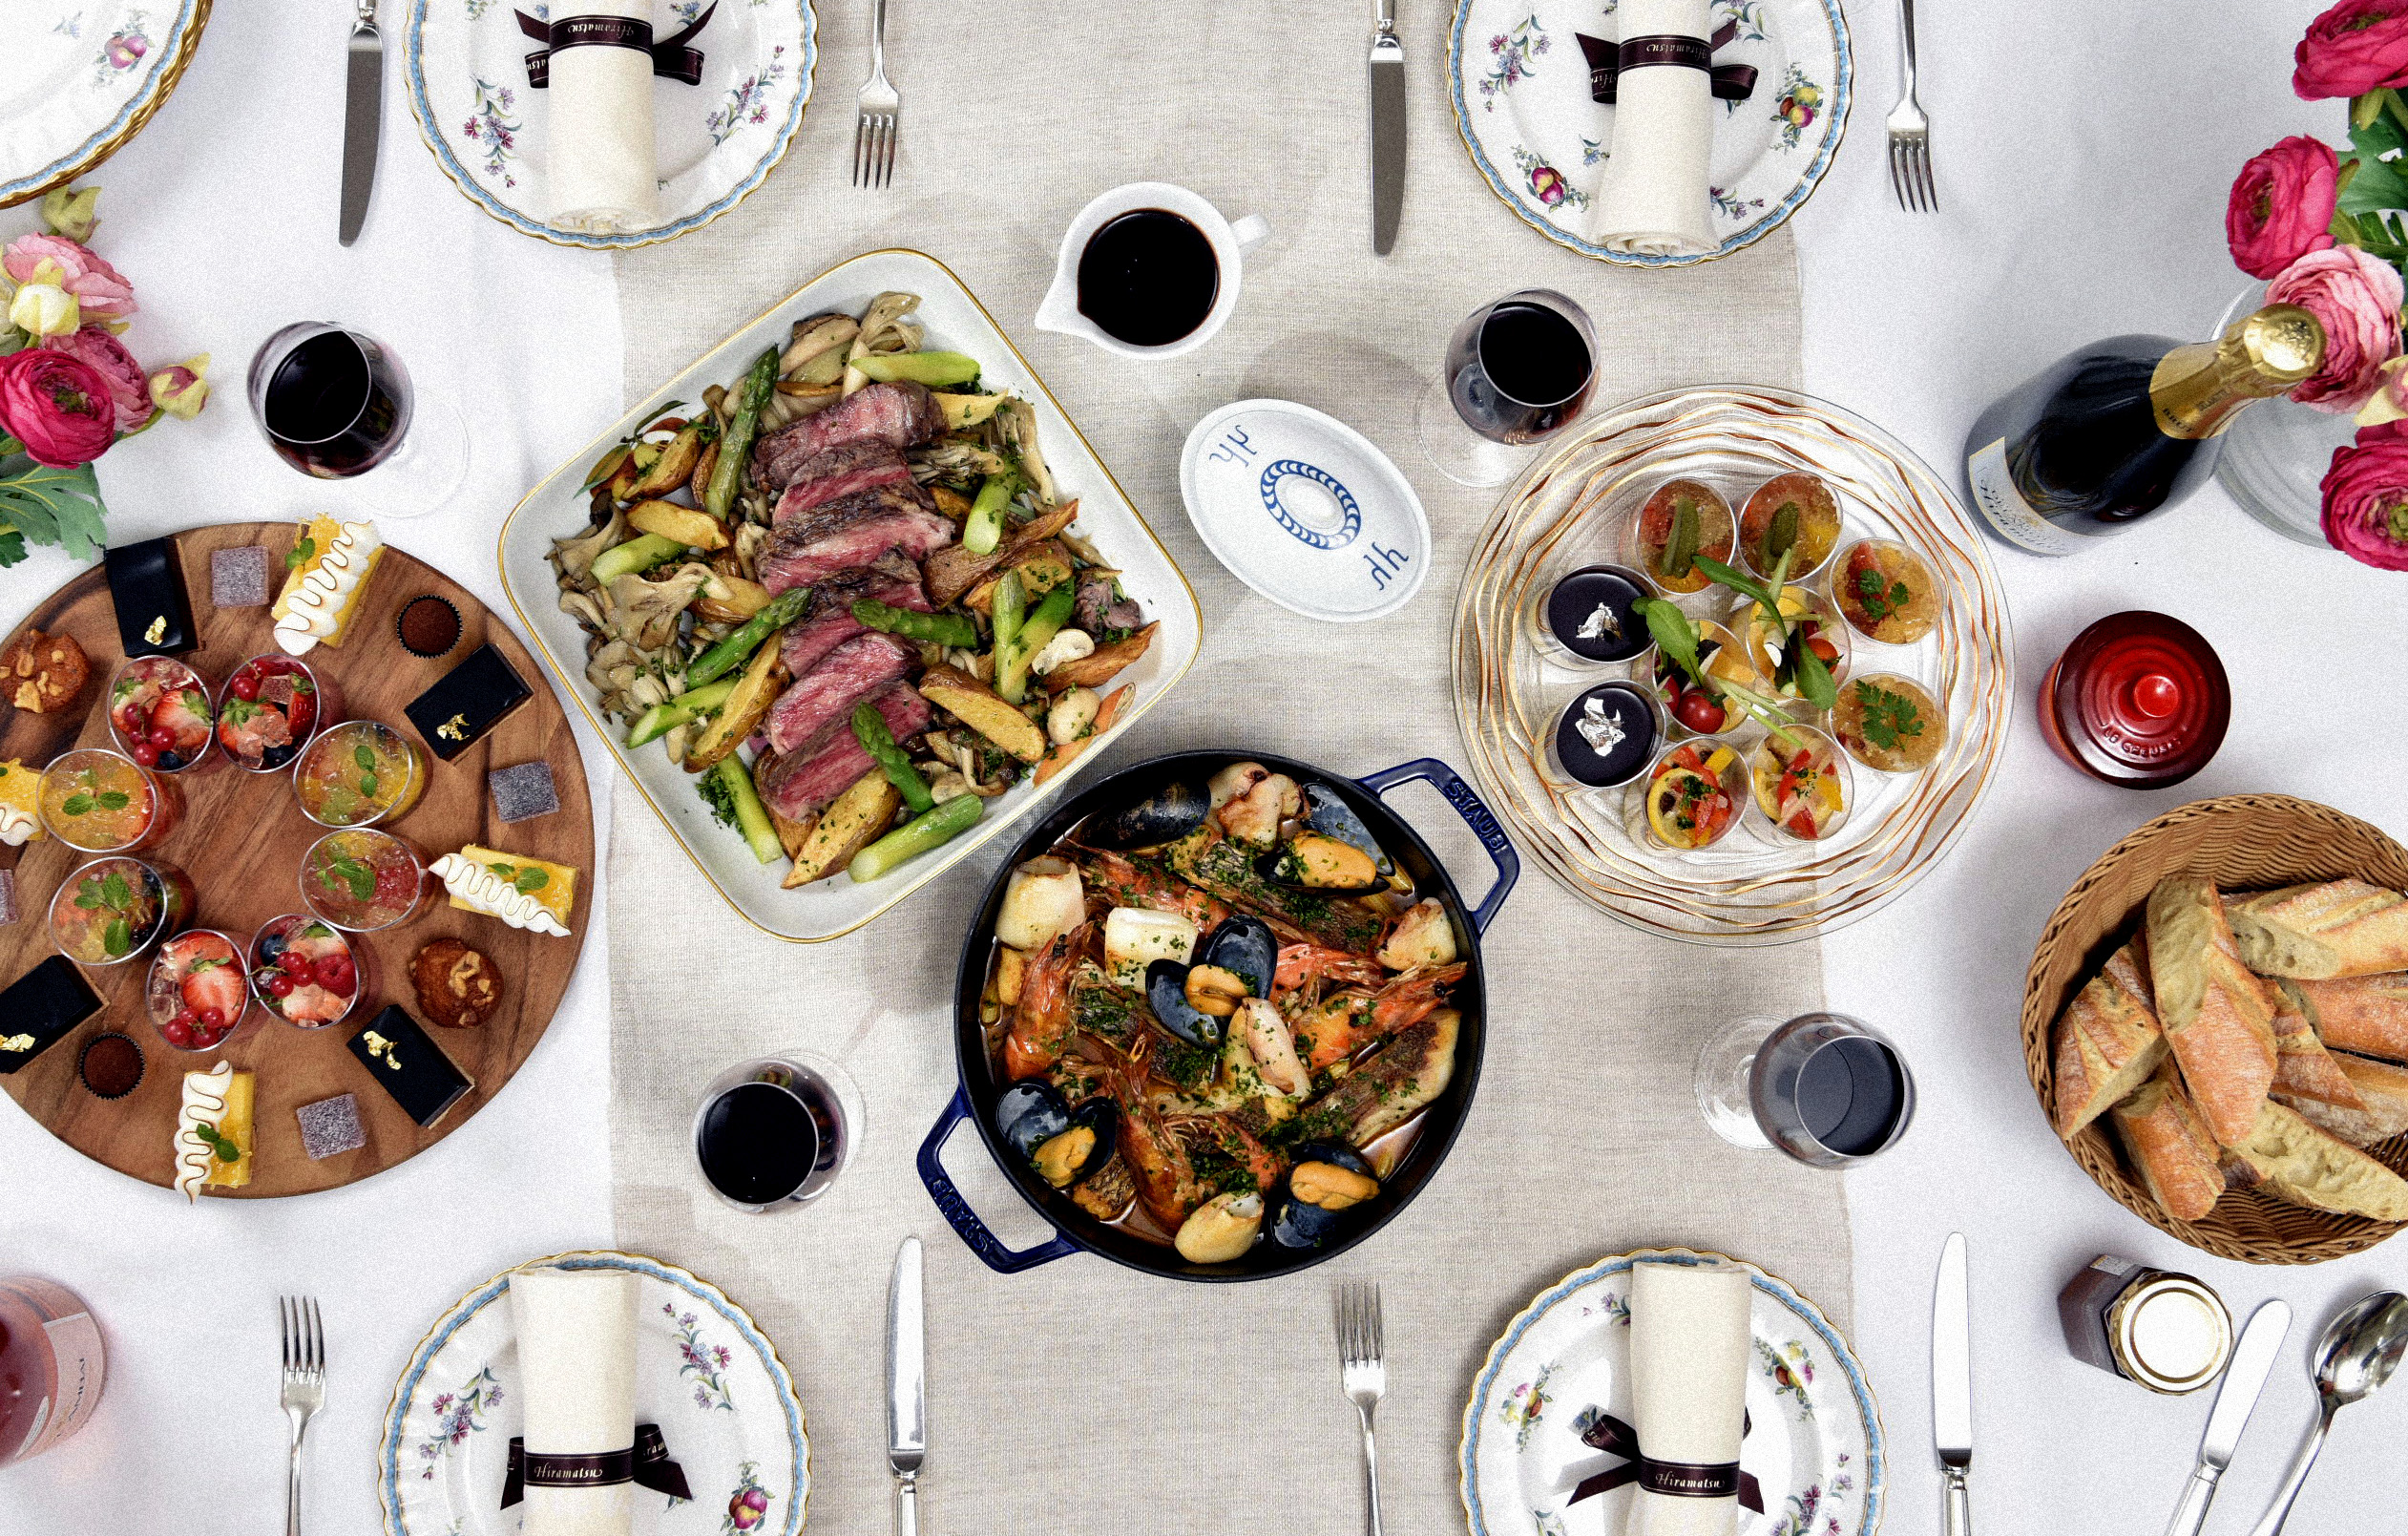 「Hiramatsu To Go」～レストランの味をご自宅で～　西麻布のフランス料理店「レストランひらまつ レゼルヴ」のテイクアウトメニューを公開